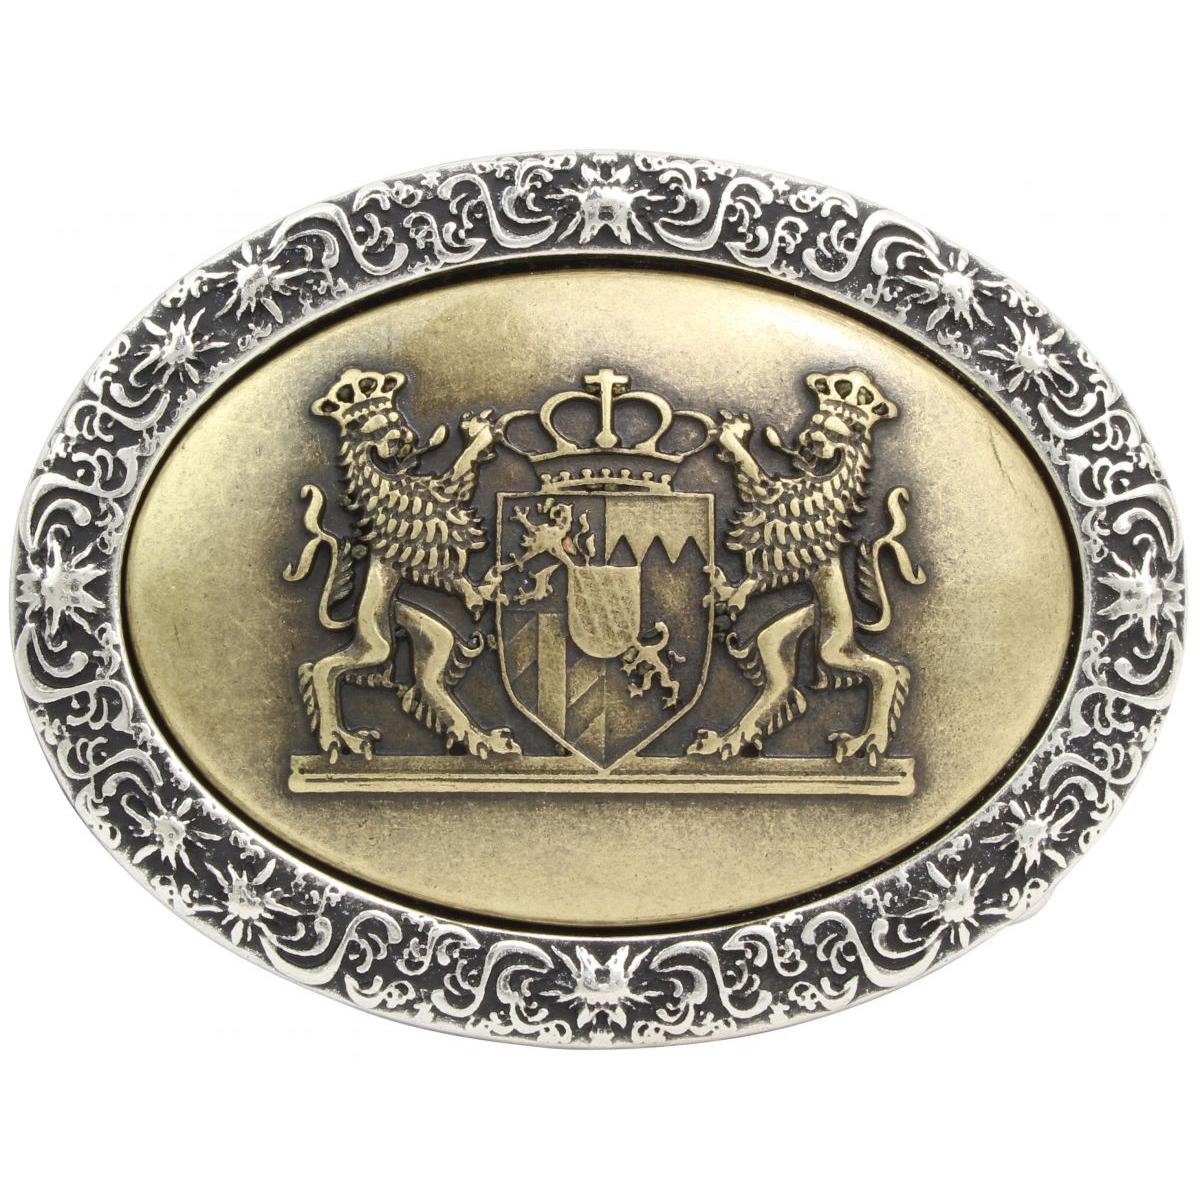 BELTINGER Gürtelschnalle Wappen Bayern 4,0 cm - Buckle Wechselschließe Gürtelschließe 40mm - Fü bicolor s/g